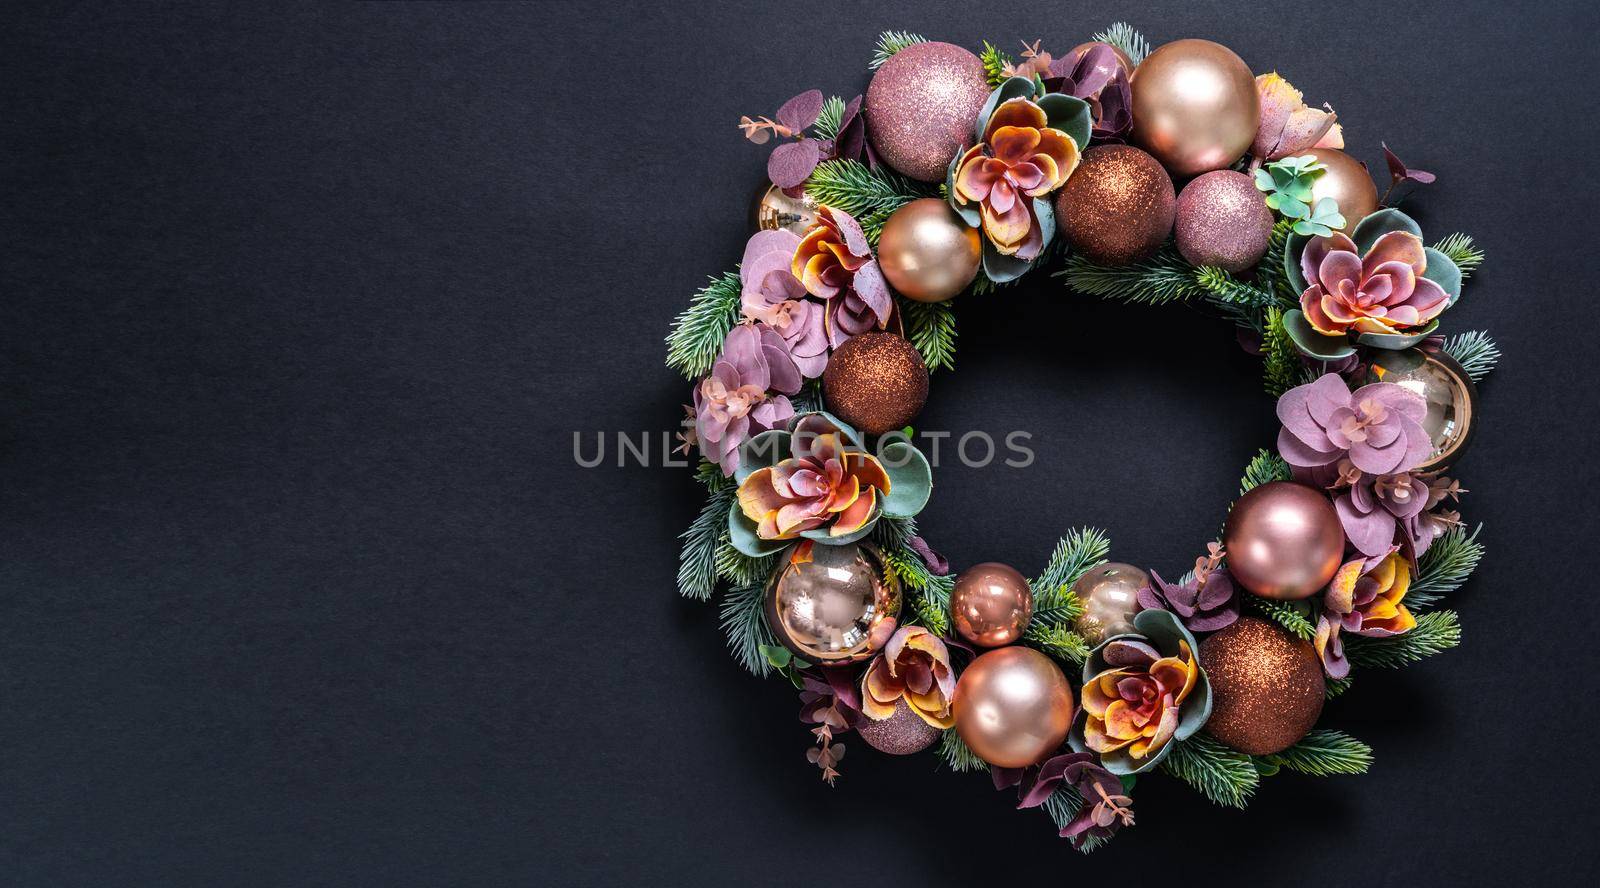 Beautiful unusual Christmas wreath hanging on pink wall